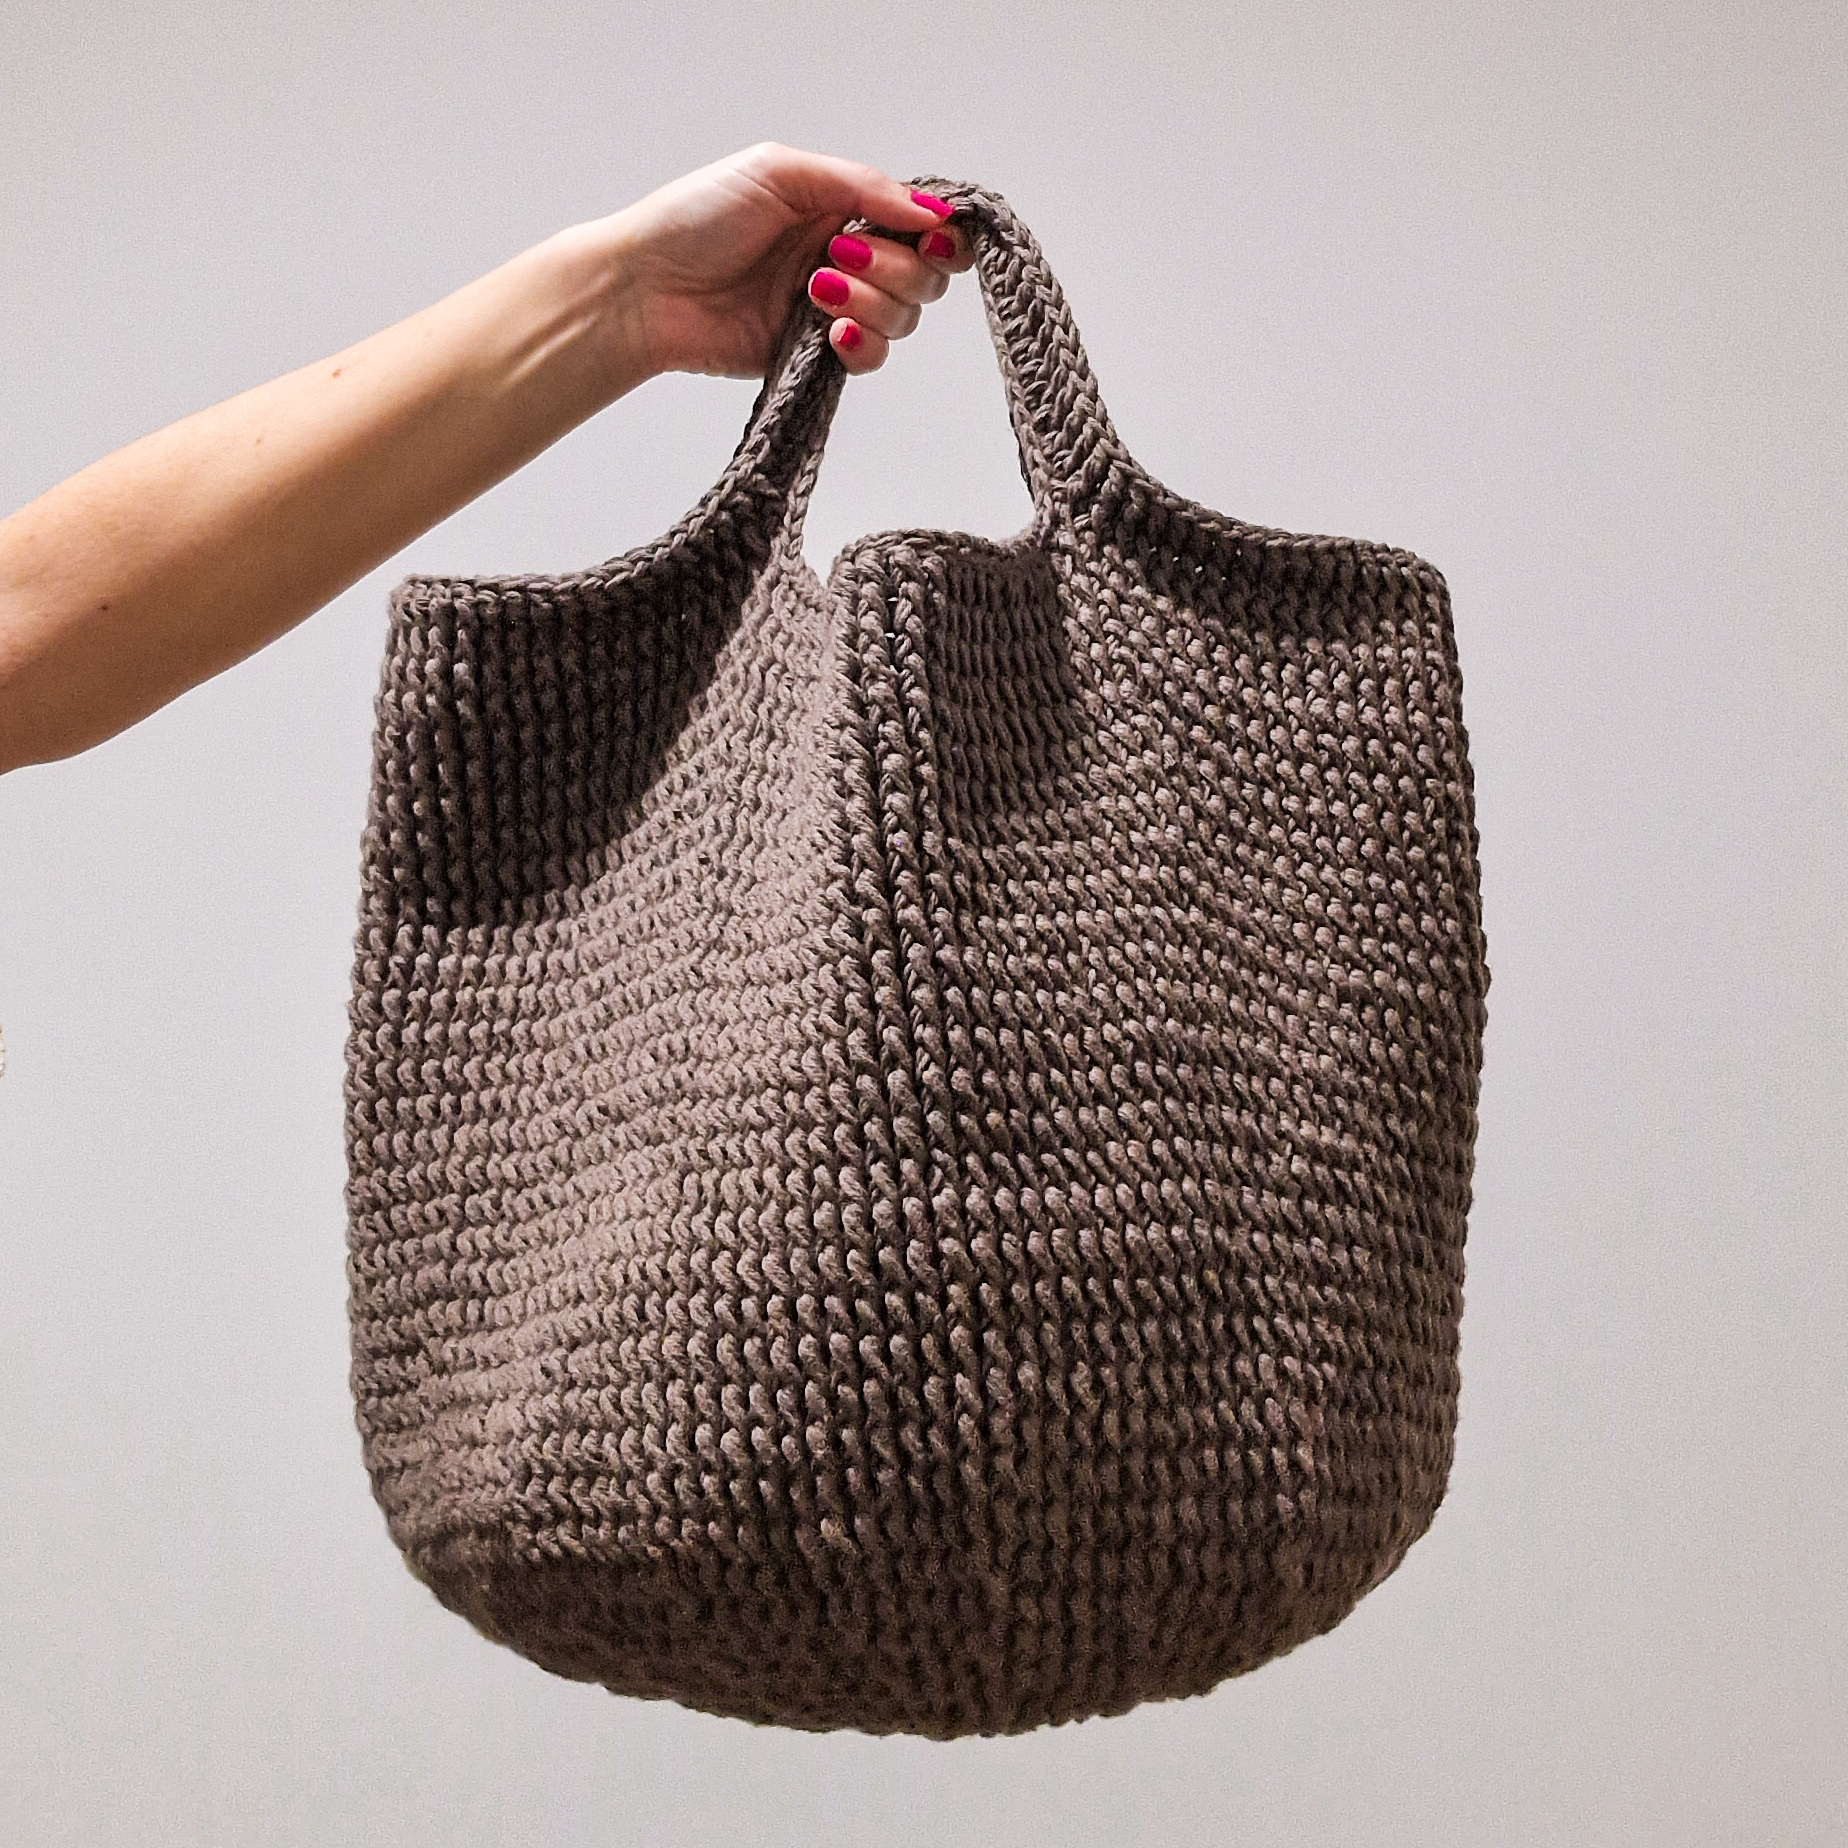 How to crochet Urban Stripe Tote Bag